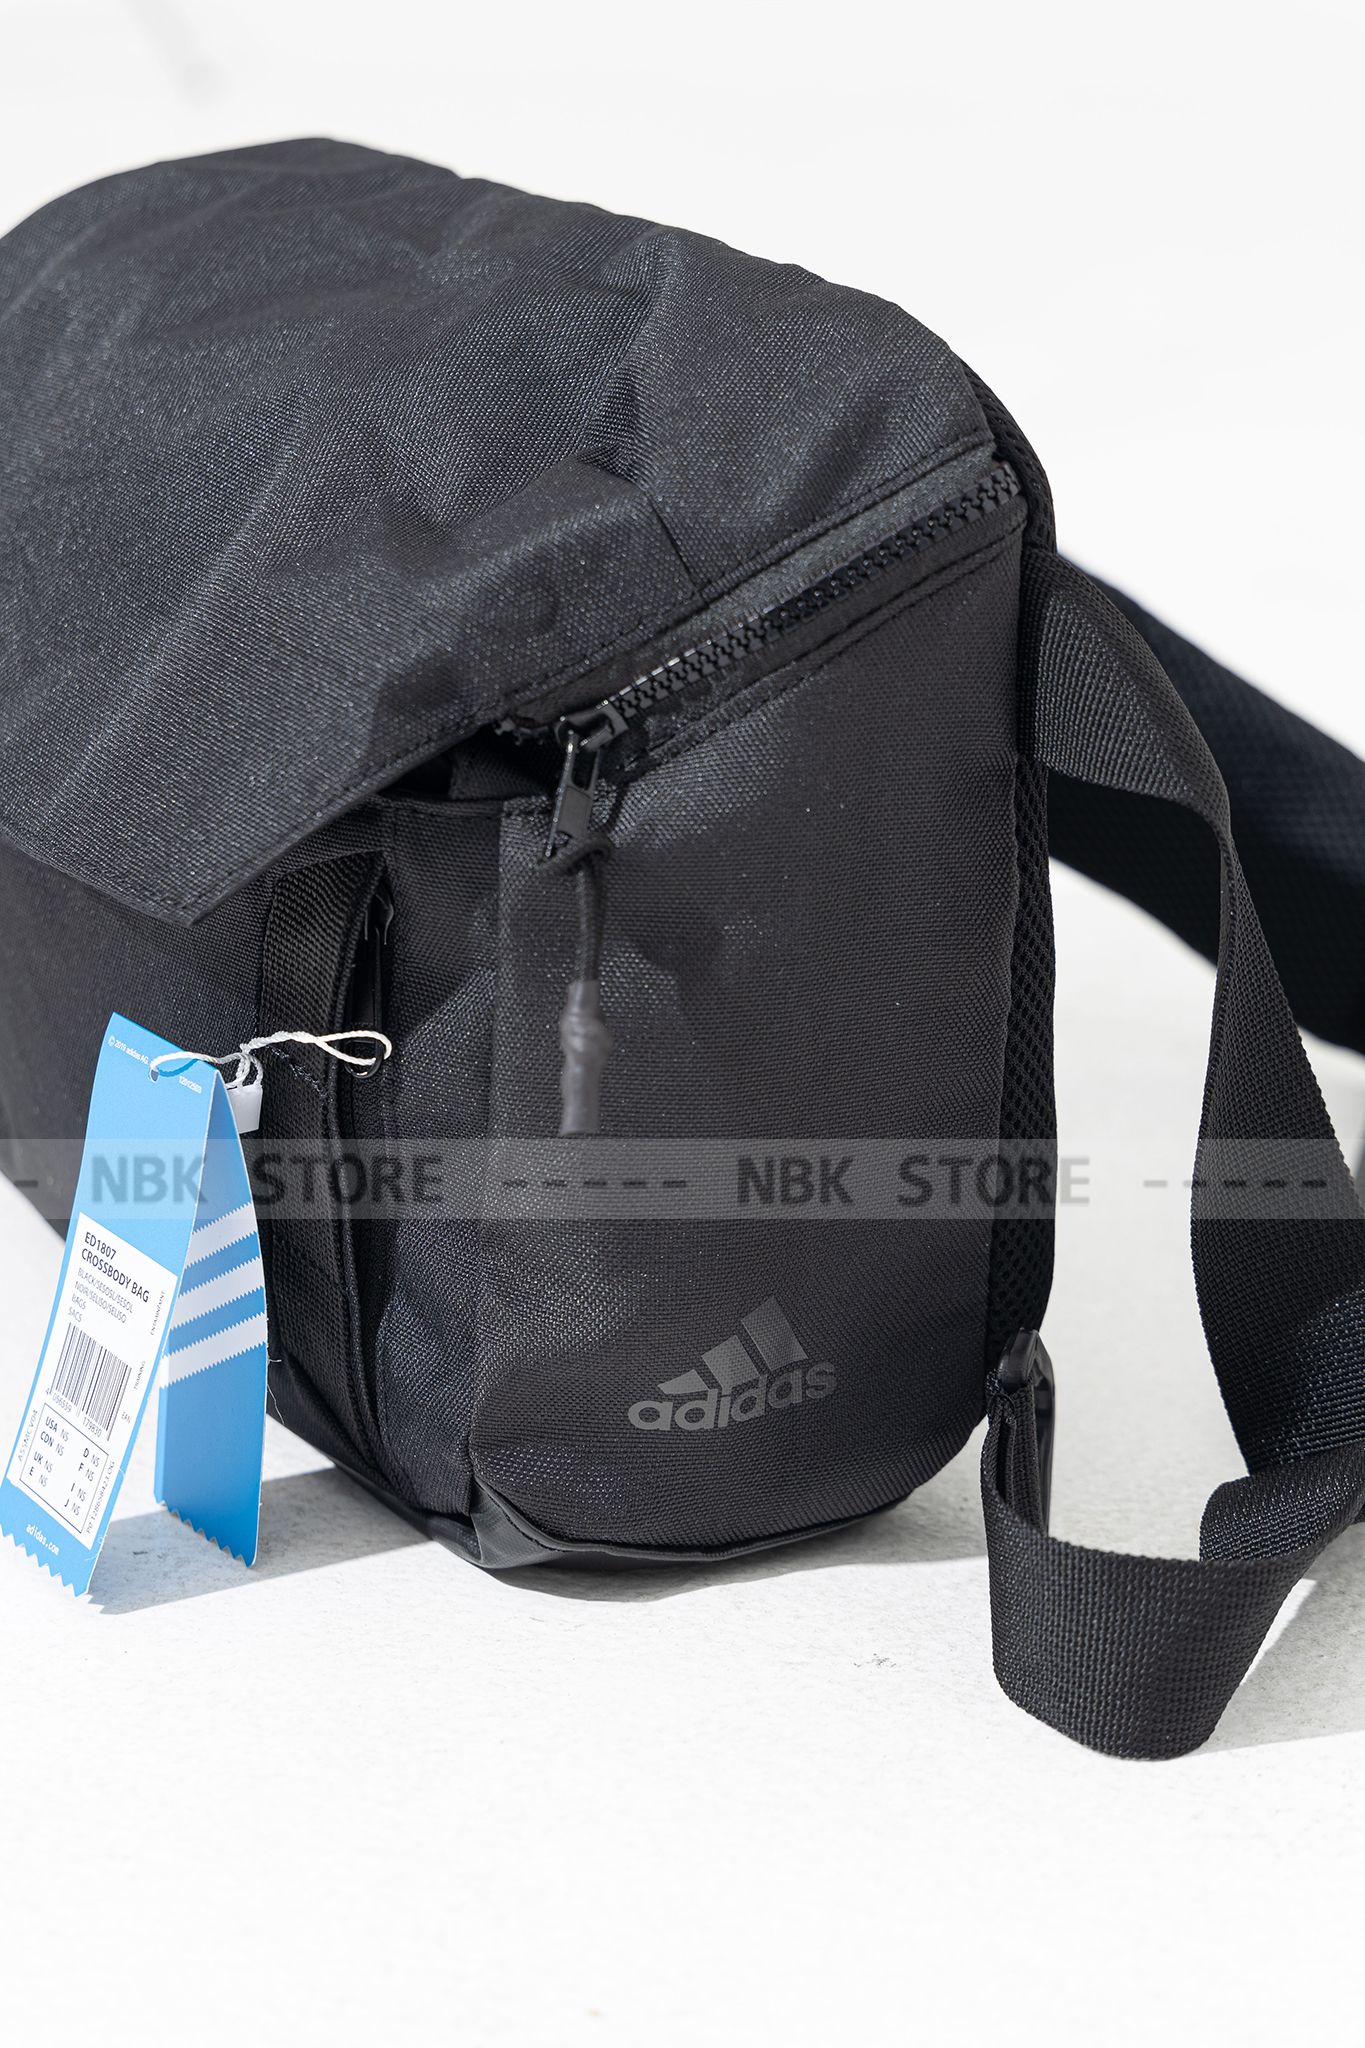 Adidas Unisex Sport Gym Messenger Bag Black Colorful … - Gem